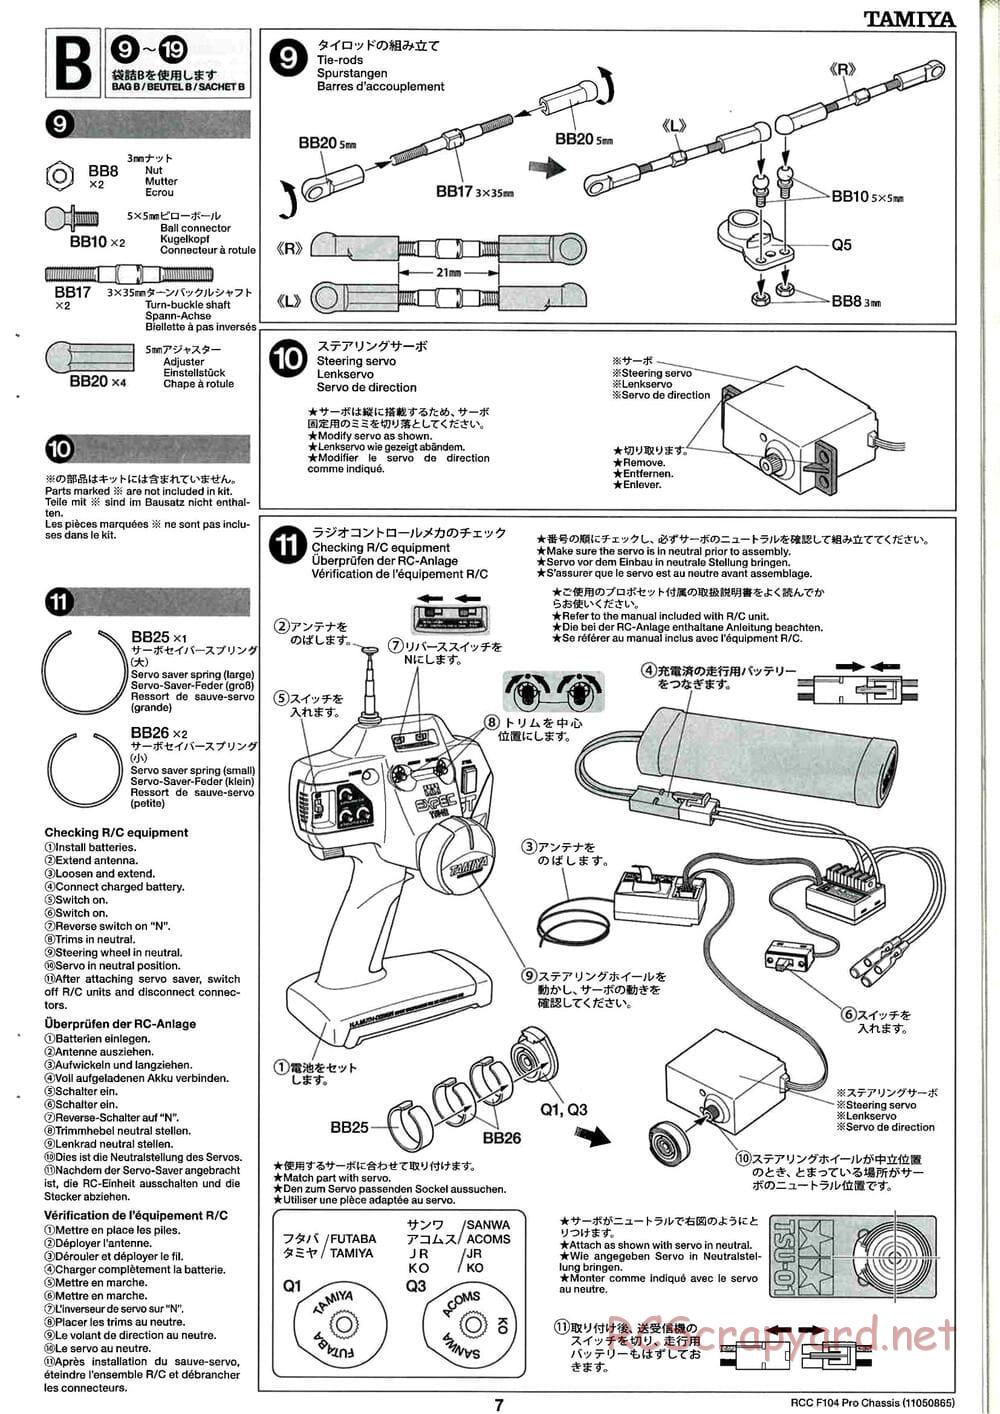 Tamiya - F104 Pro Chassis - Manual - Page 7